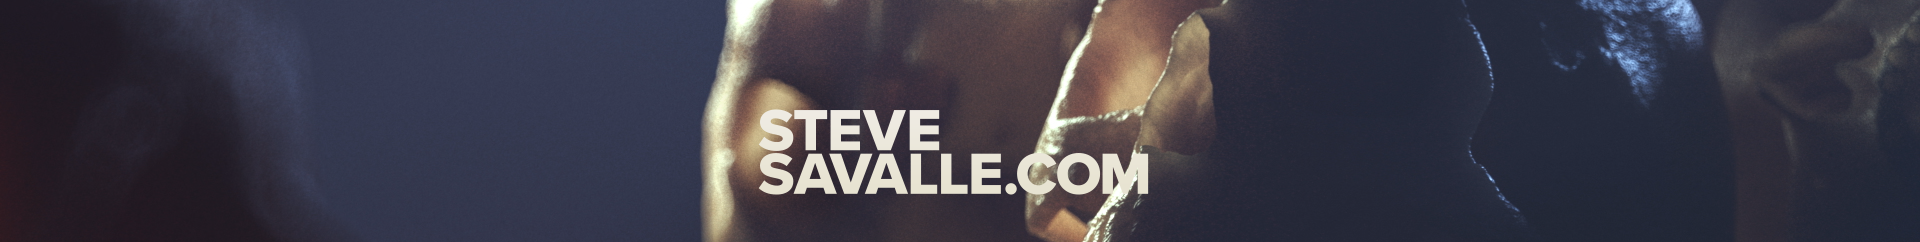 Steve Savalle's profile banner